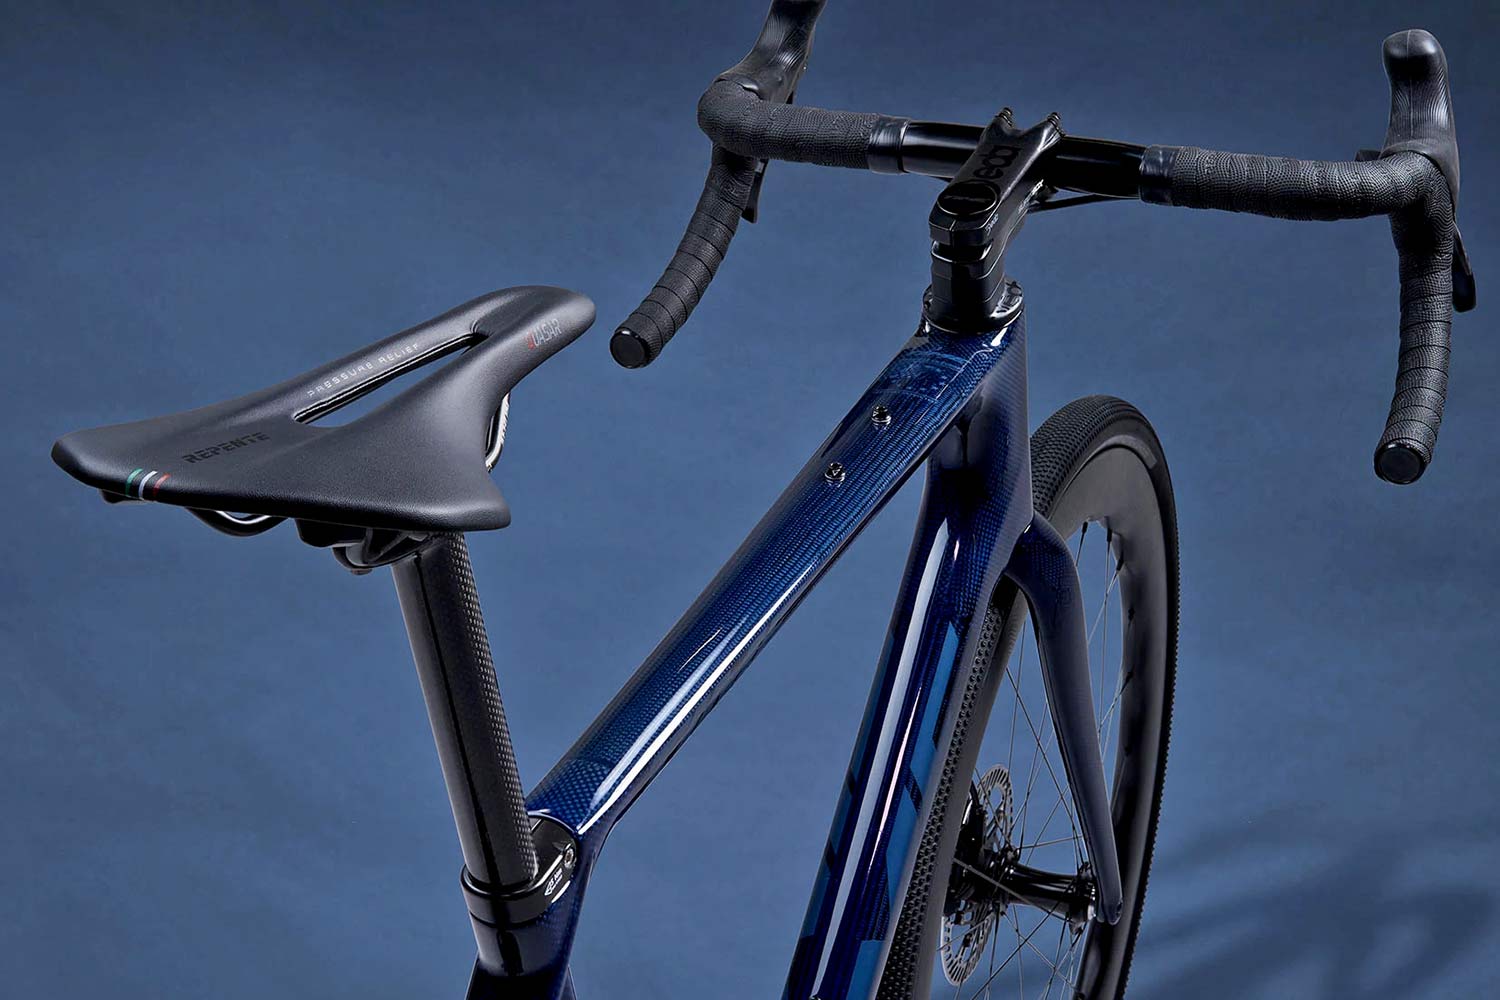 TIME ADHX bio-based-Dyneema carbon all-road gravel bike, top tube mount